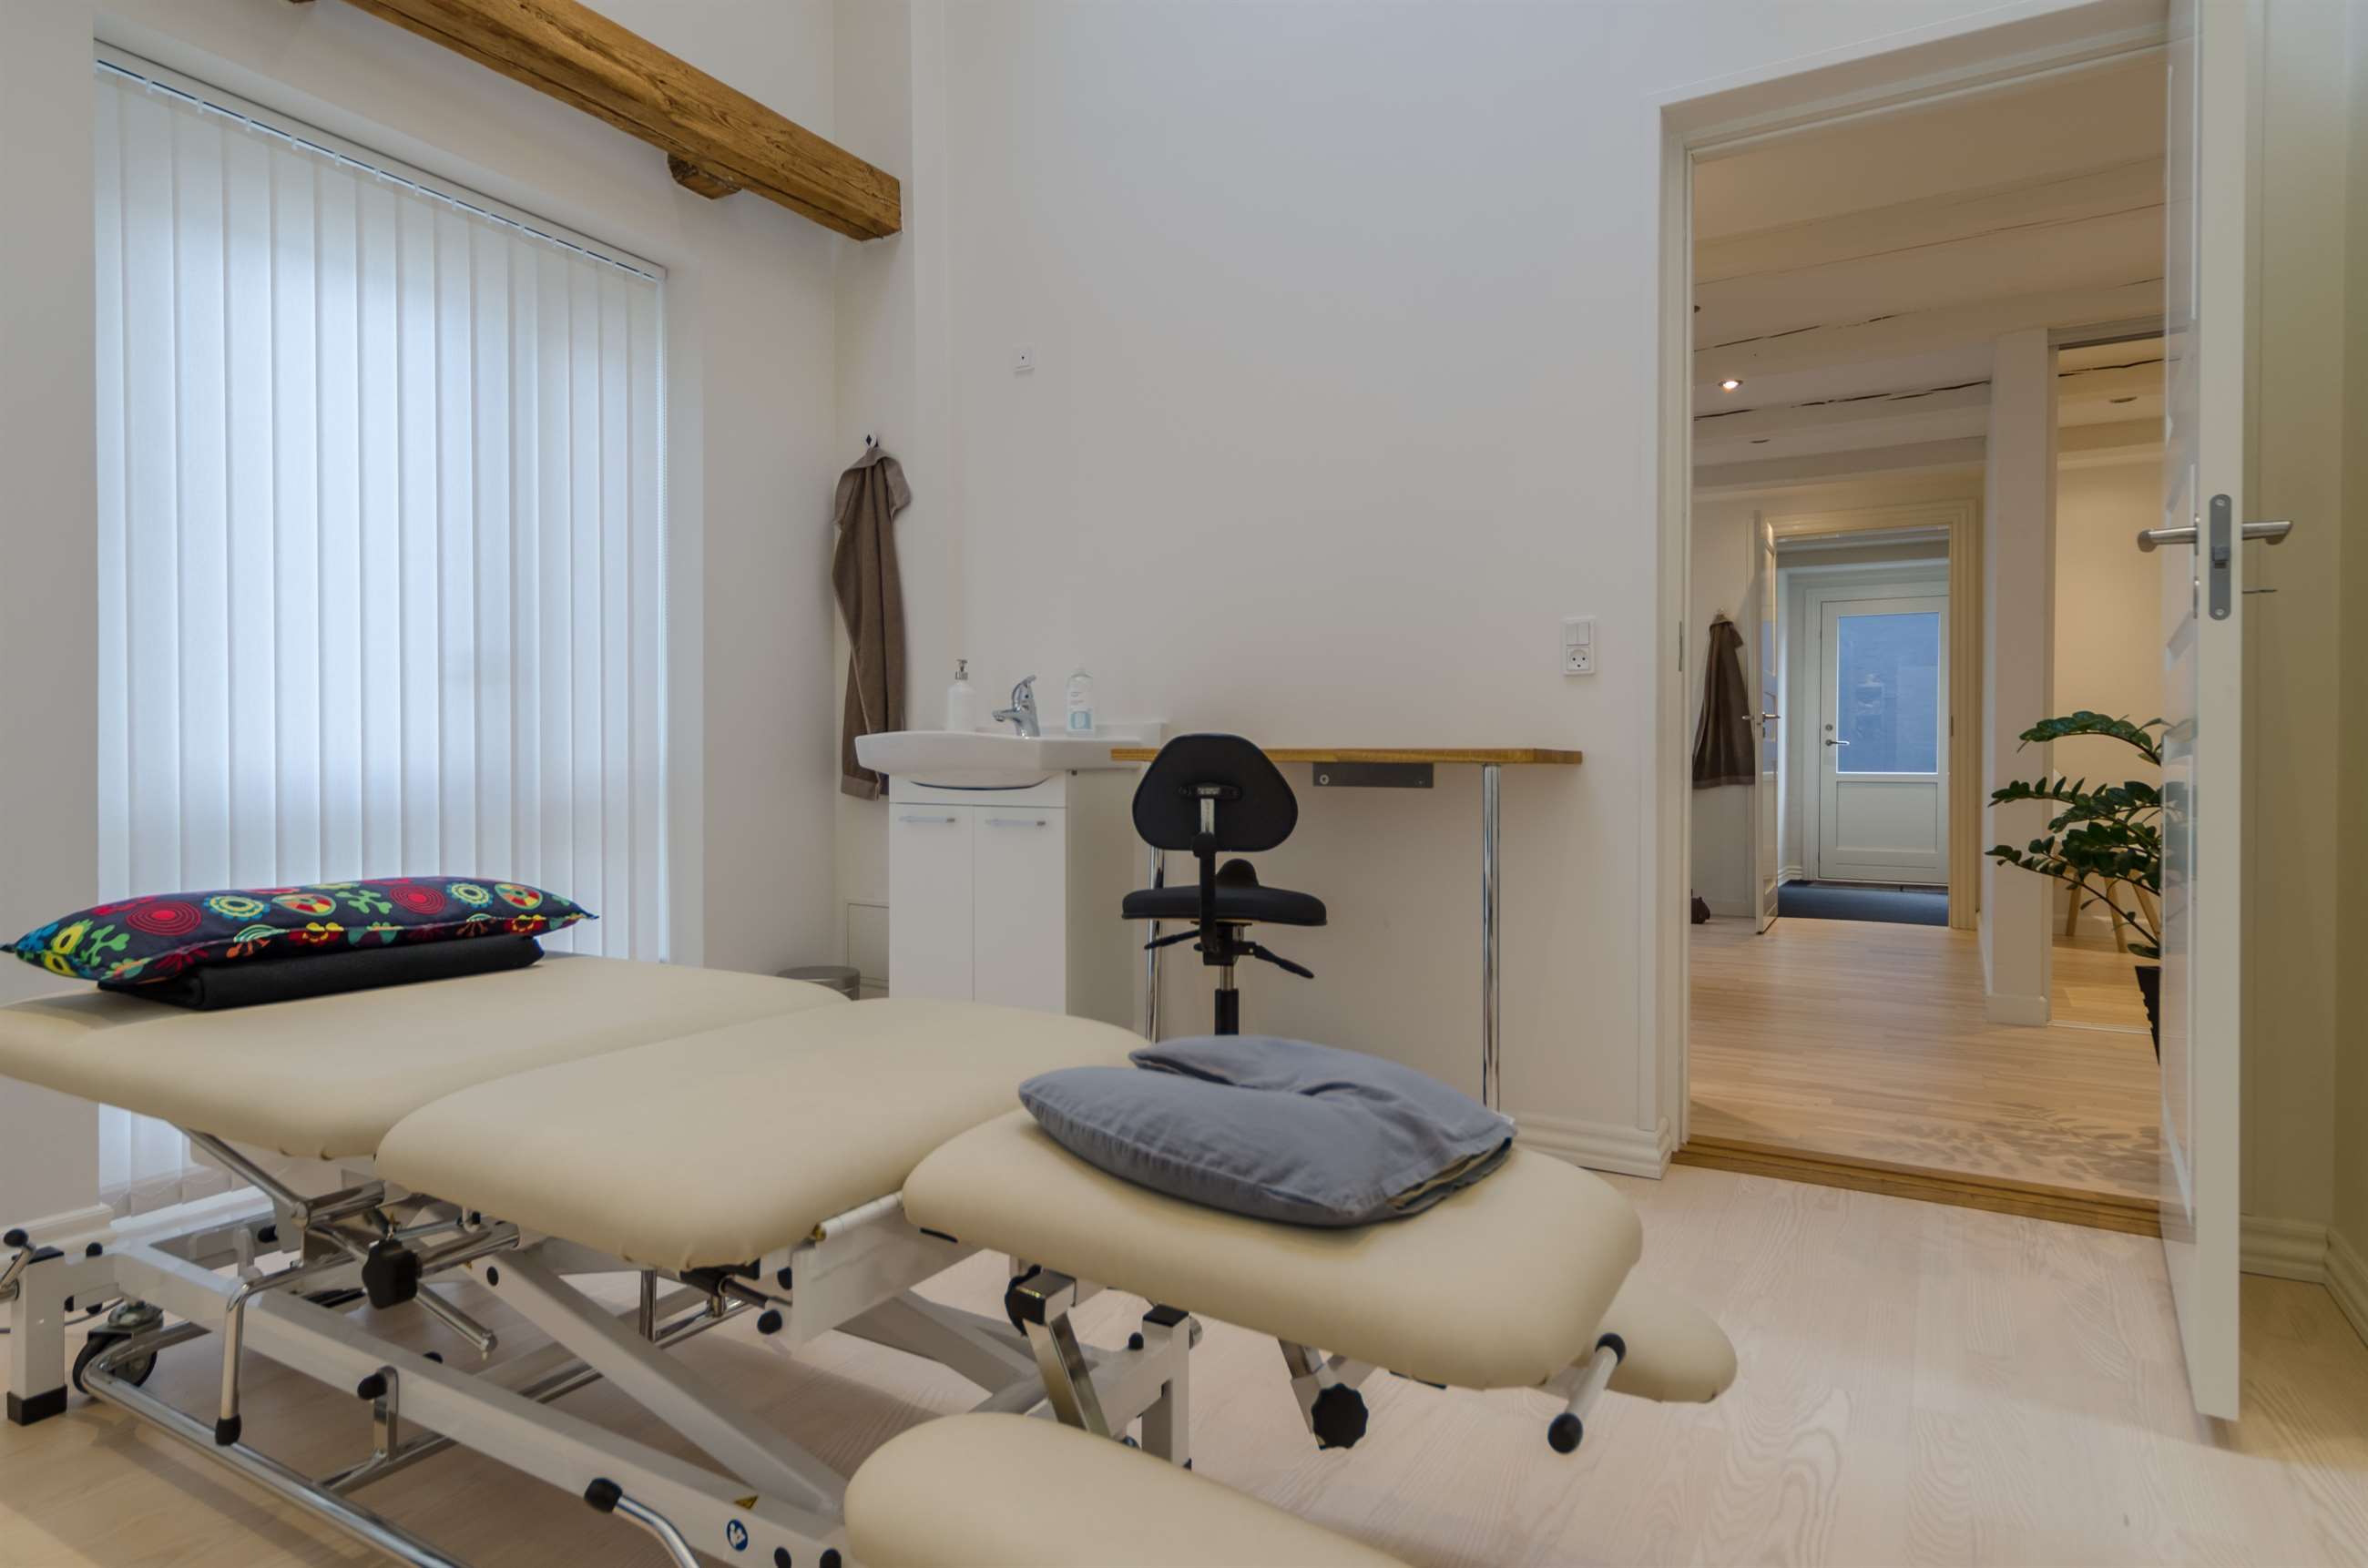 Behandlingsrummet hos Fysioterapi & akupunktur v/ Jakob Andreasen i Odense nær Langeskov & Ringe.